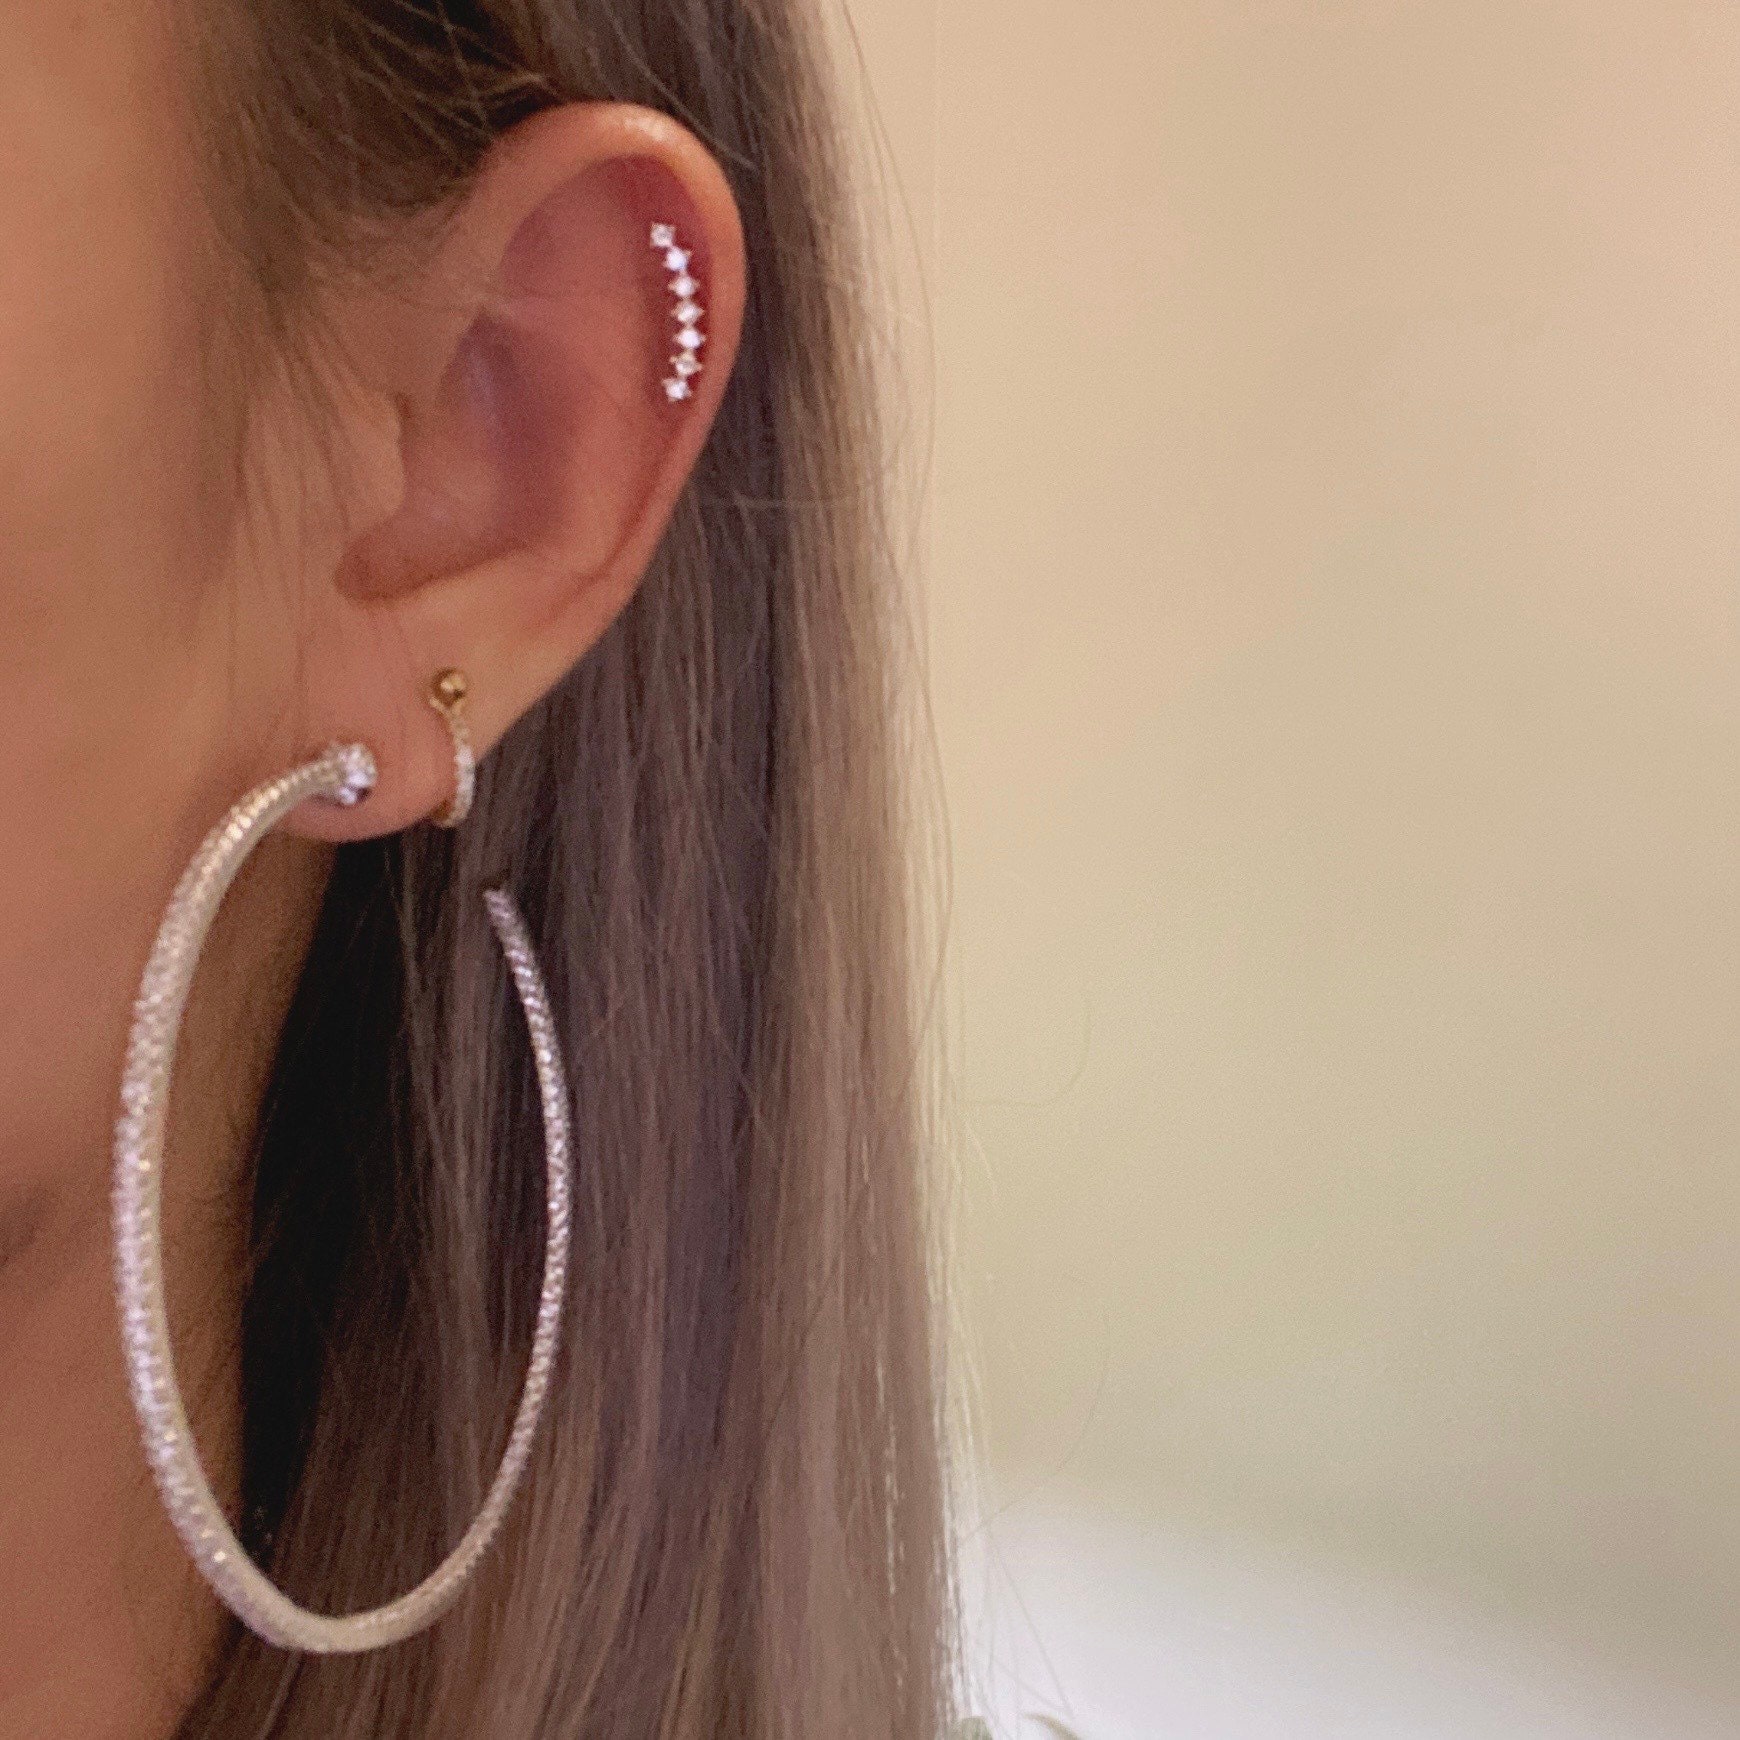 10 pairs big Hoop Earrings set for women Stainless Steel hoop Earrings gold plated Sensitive Ears fashion jewelry gifts 15-60mm 